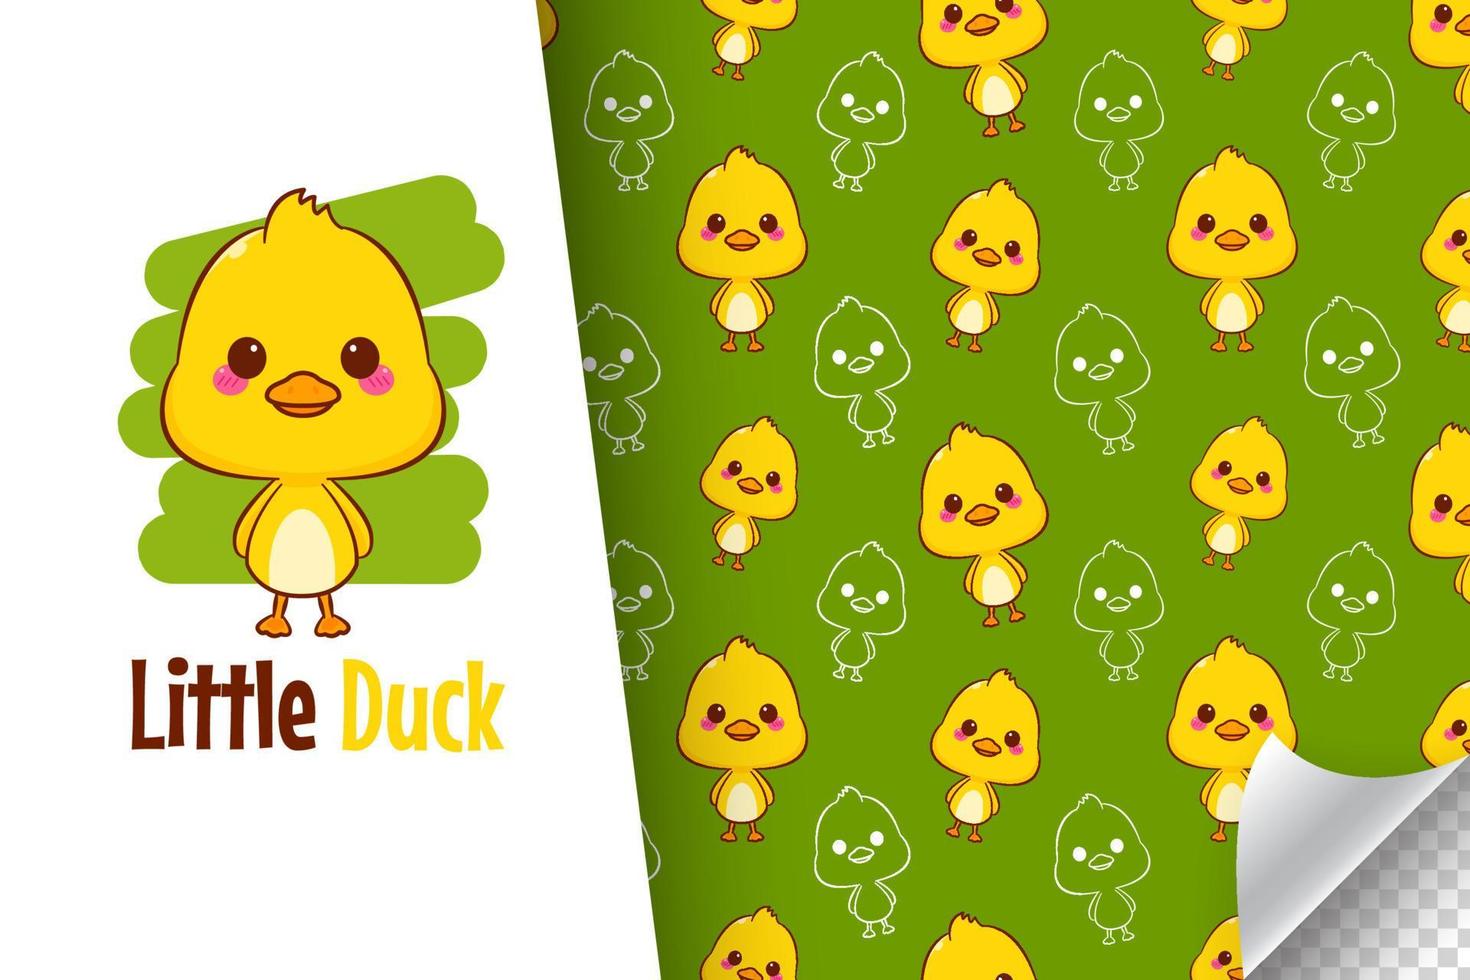 Cute duck cartoon character seamless pattern illustration vector